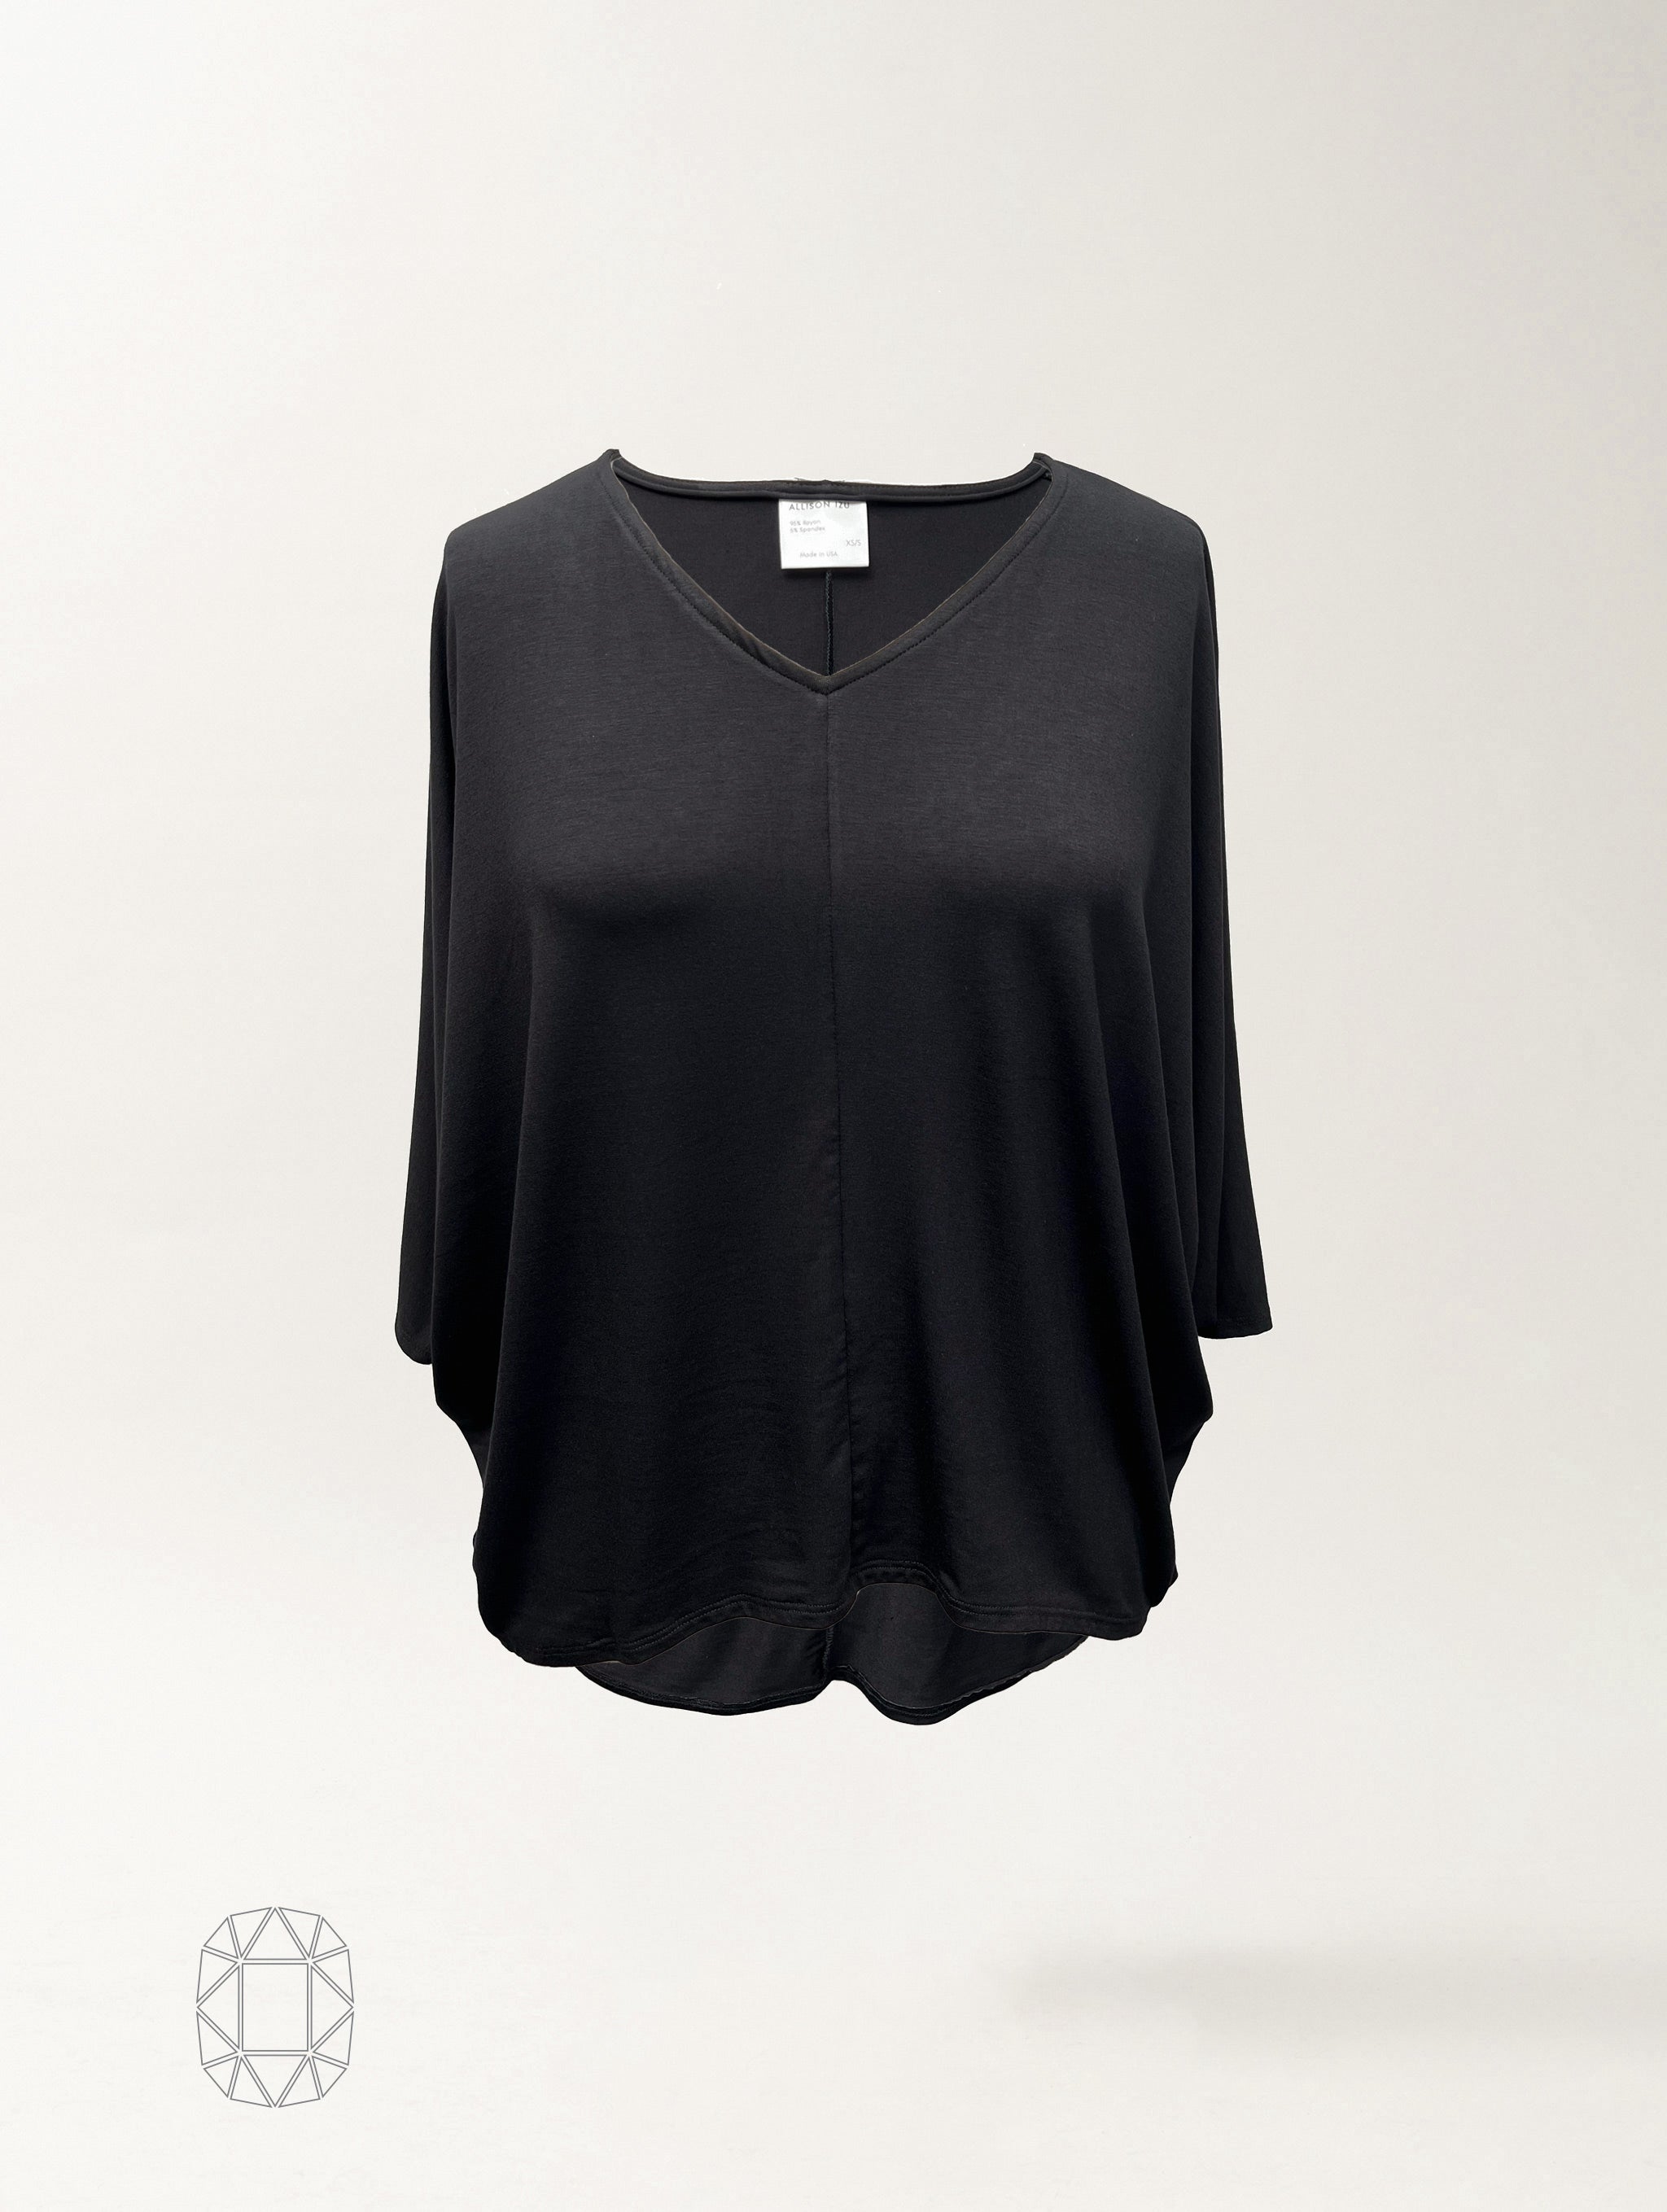 Megumi Top - Black Rayon Jersey